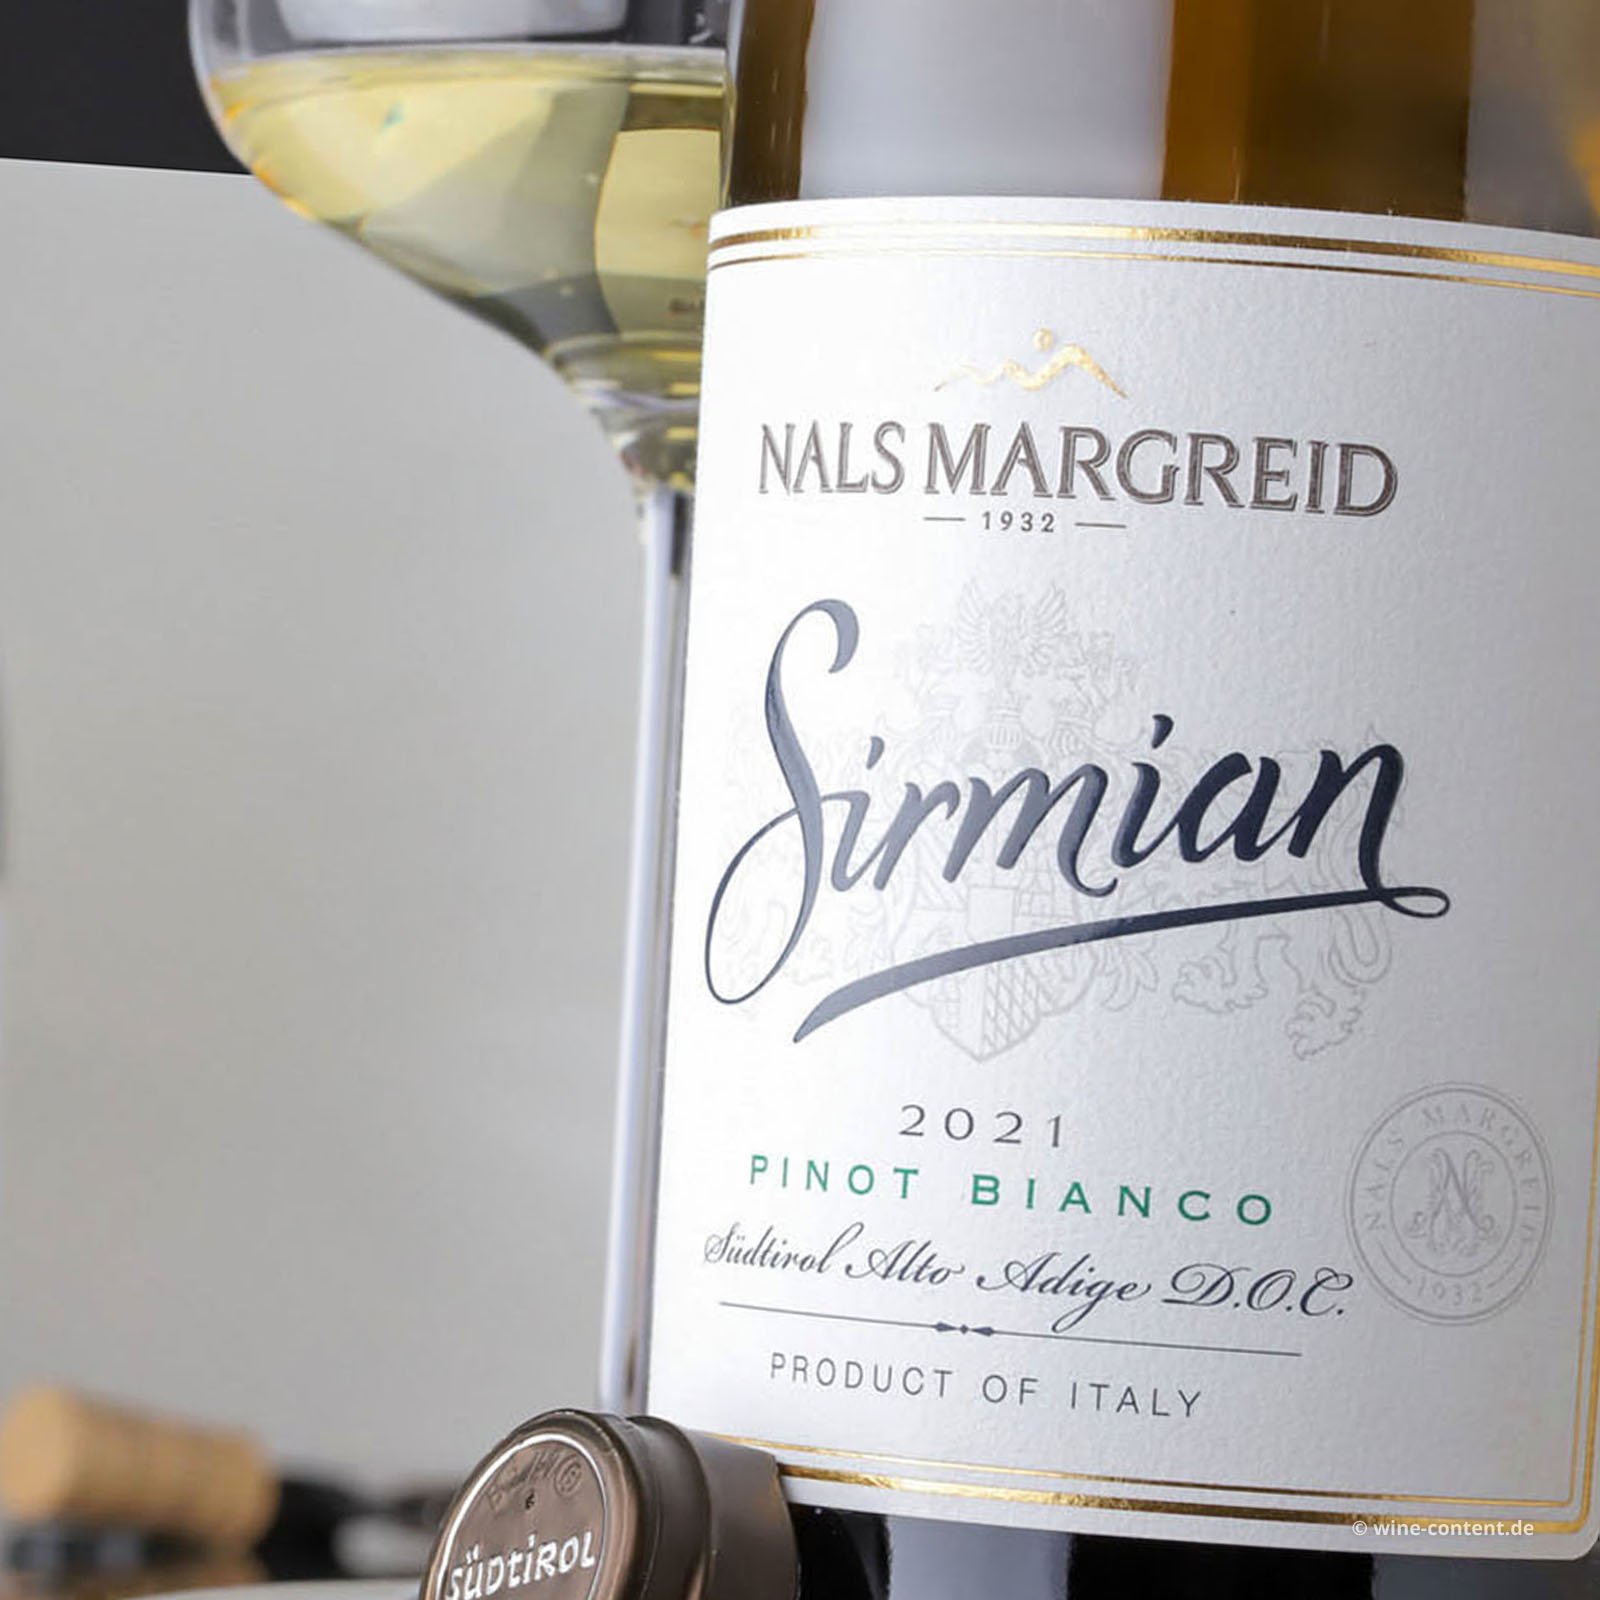 Pinot Bianco 2021 Sirmian